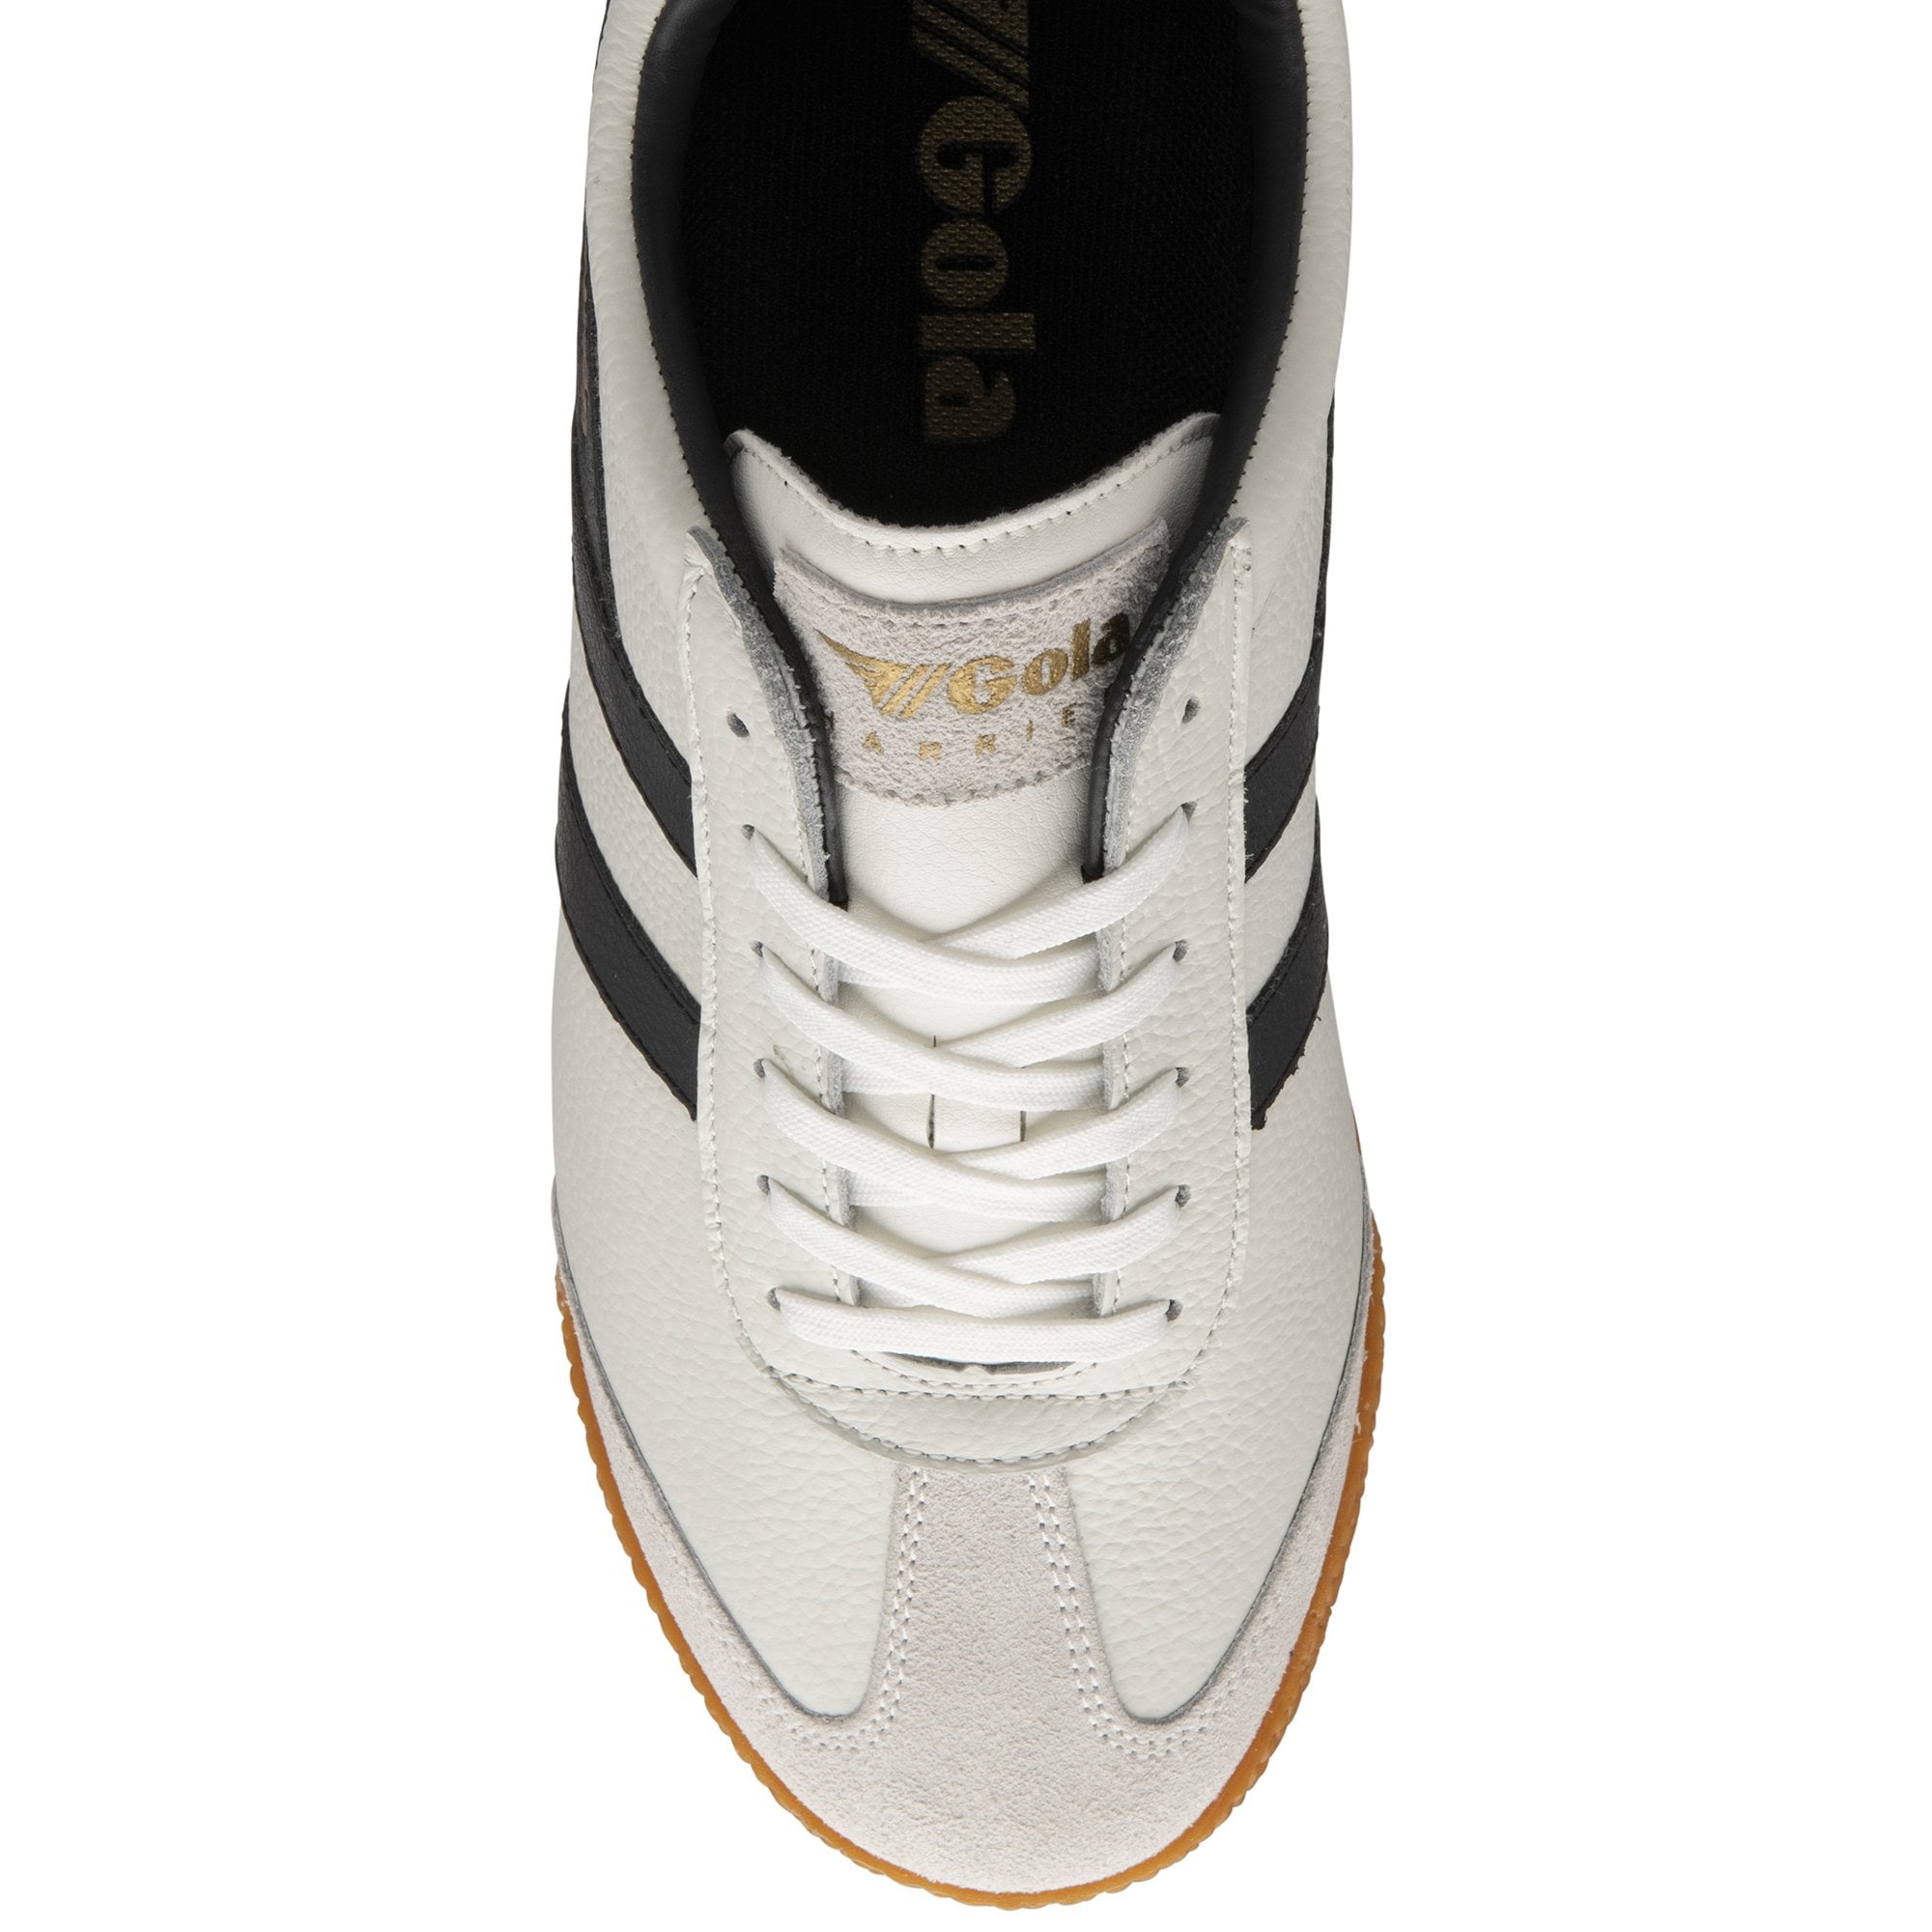 Gola Classics Sneaker Men's Harrier Leather Trainers White / Black / Black 